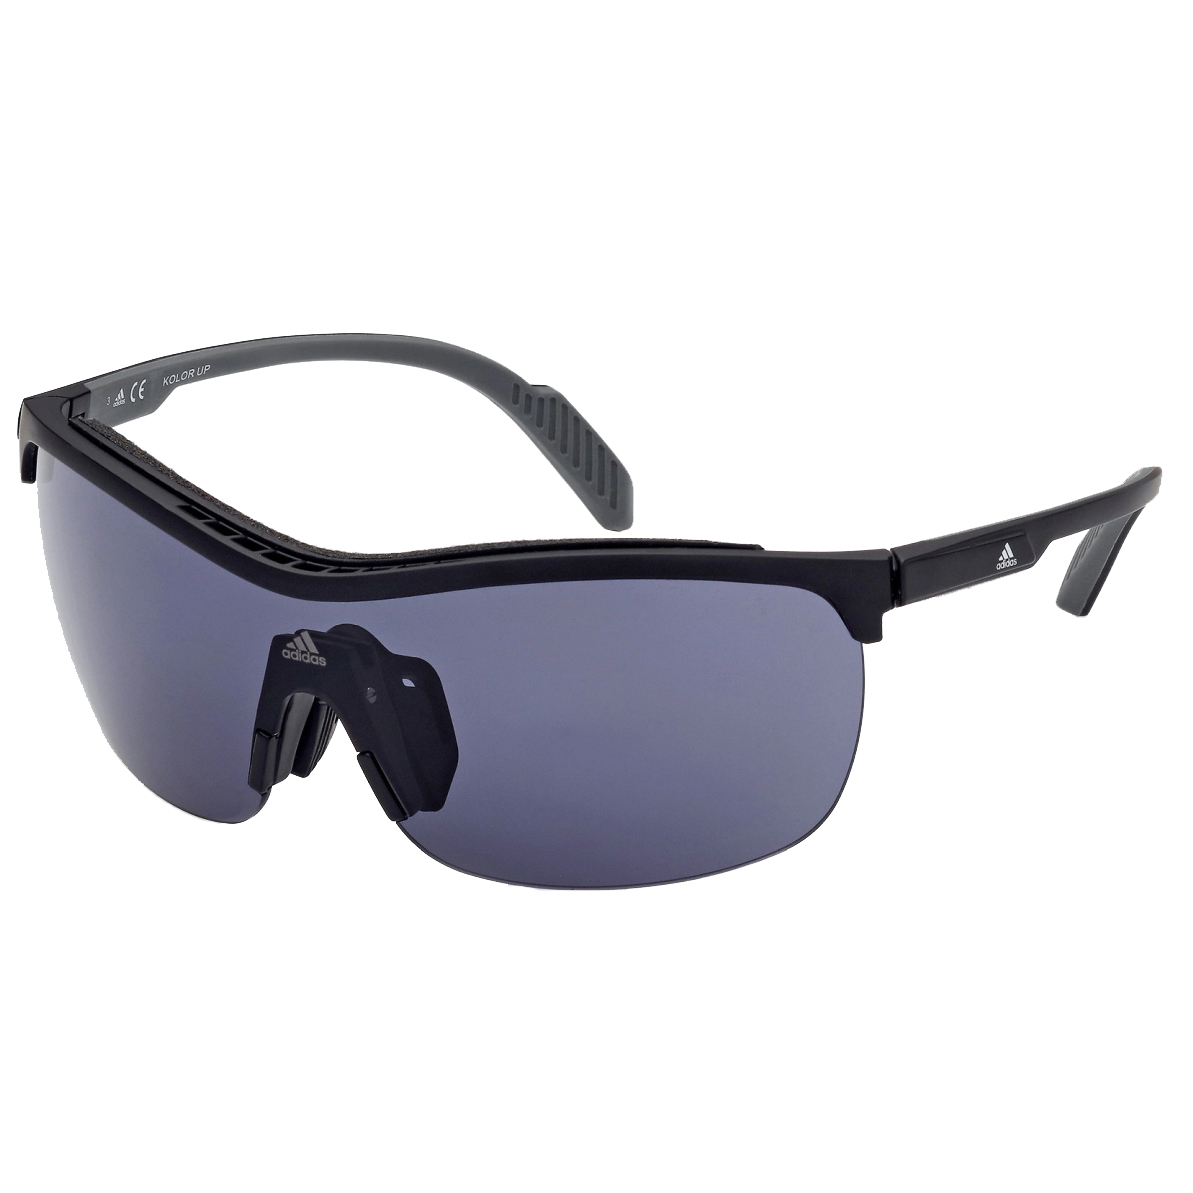 Productfoto van adidas Prfm Shield Lite Pro SP0043 Sport Sunglasses - Matte Black / KOLOR UP Smoke